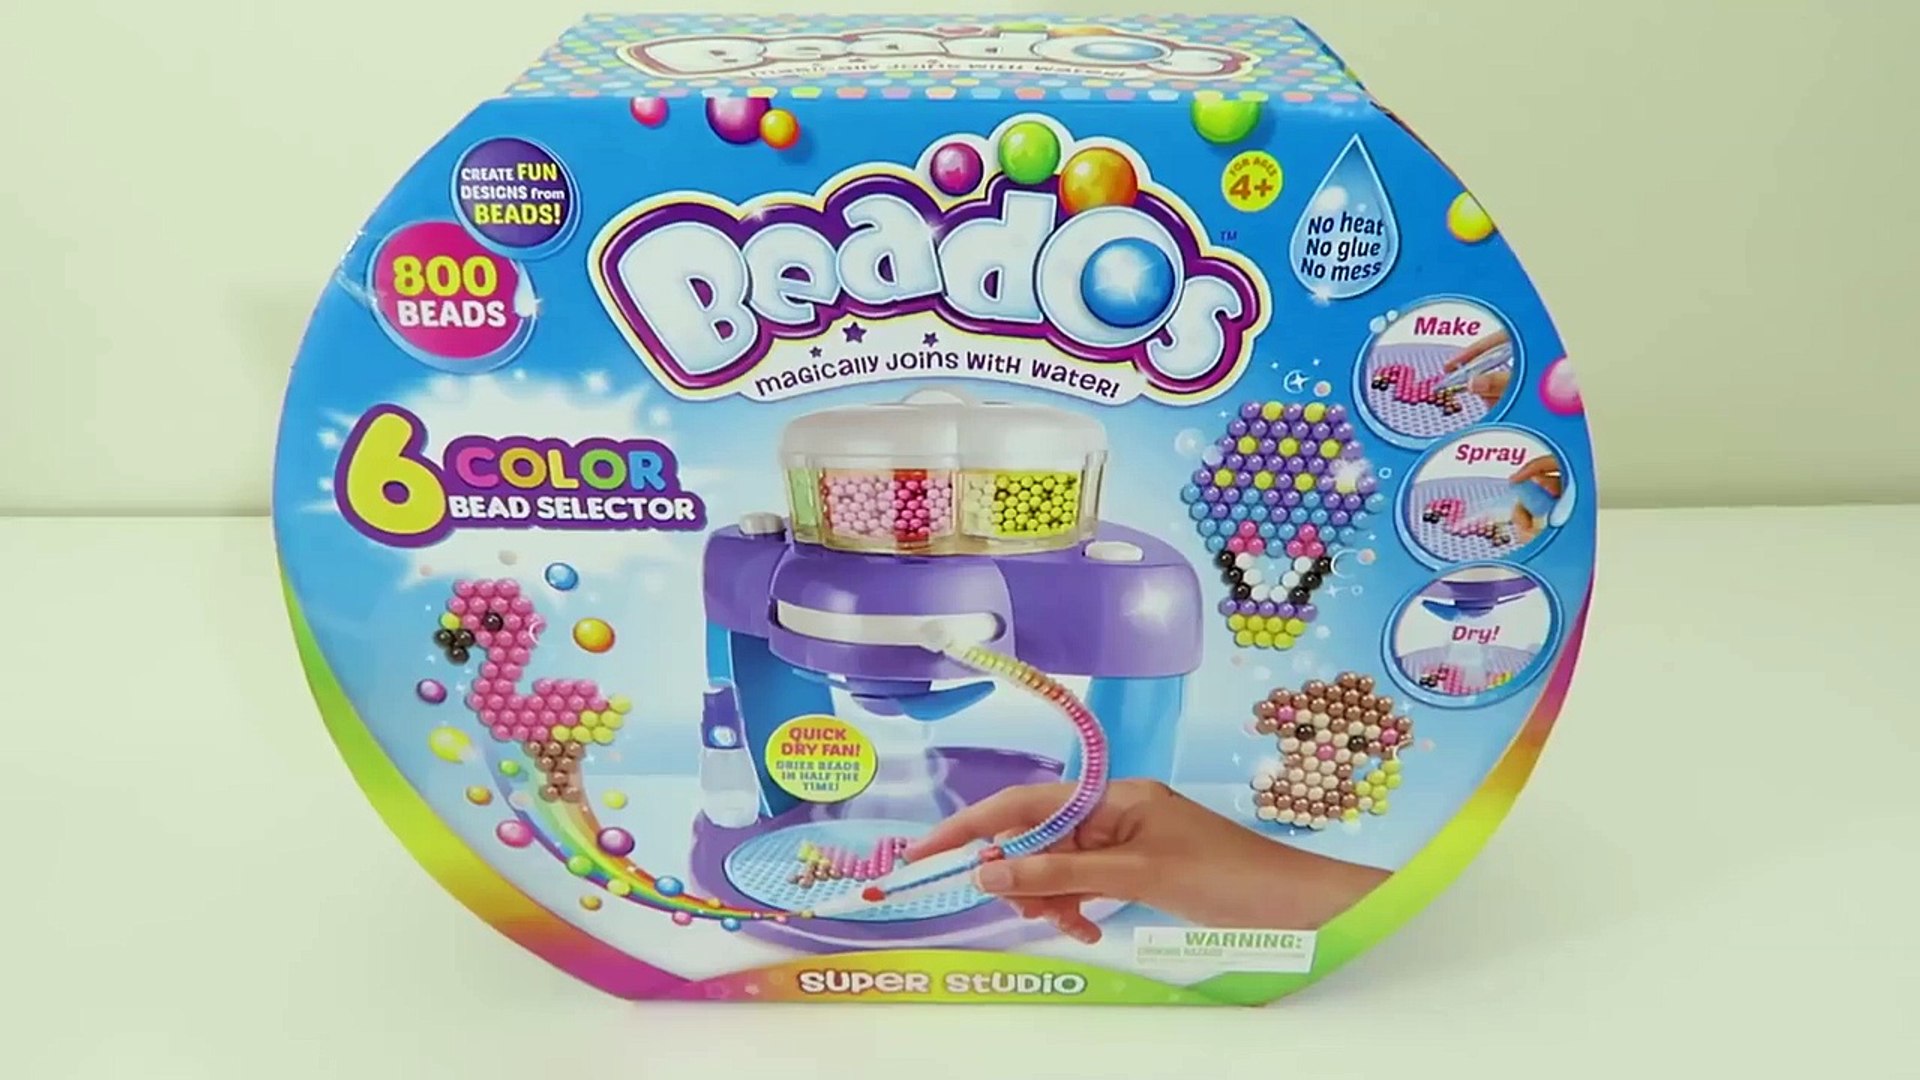 Beados Super Studio Playset  Easy DIY Make Your Own Magic Beads Animal &  Ice Cream Shapes! - video Dailymotion